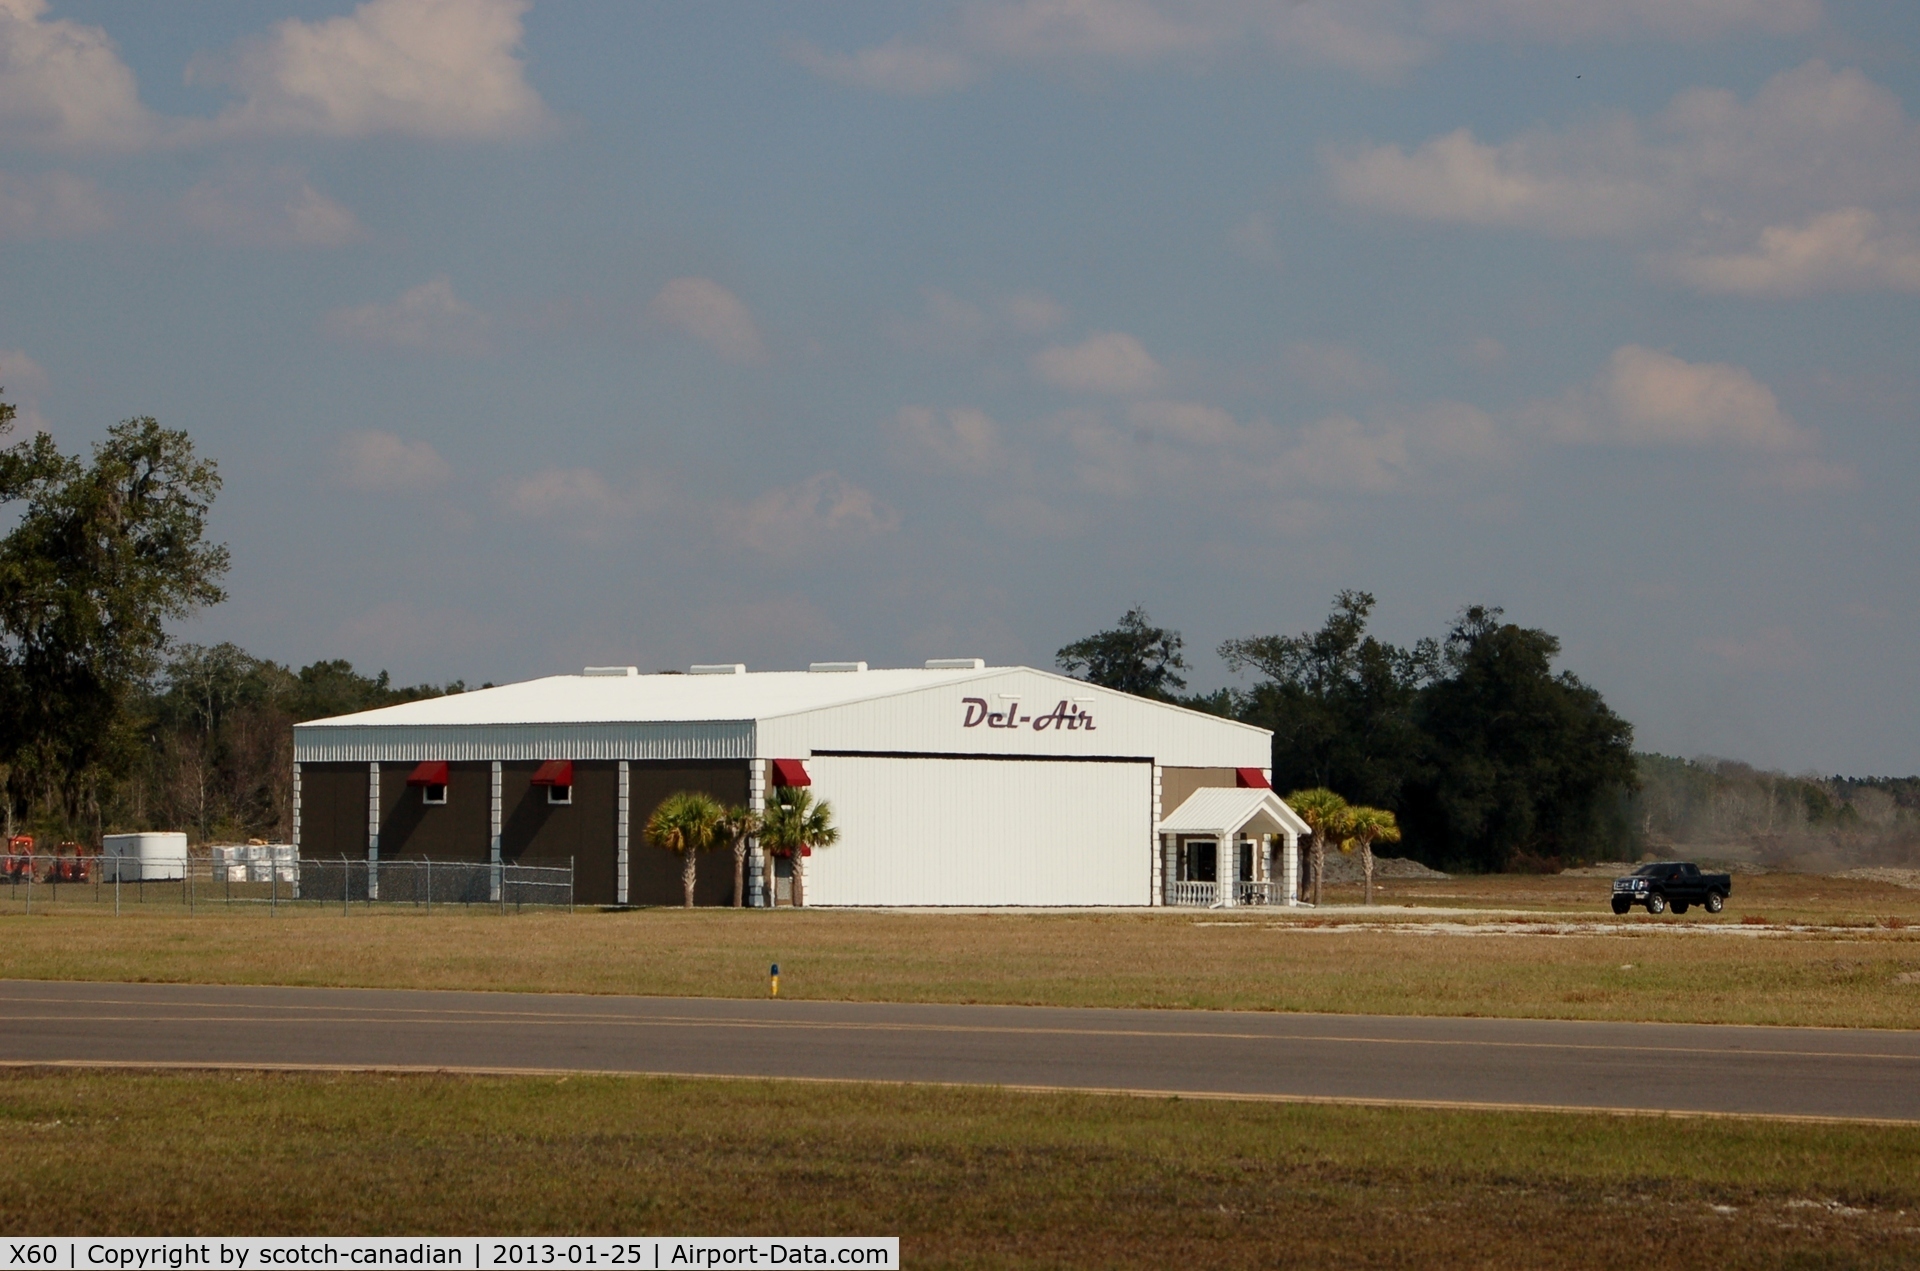 Williston Municipal Airport (X60) - Del-Air Hangar at Williston Municipal Airport, Williston, FL